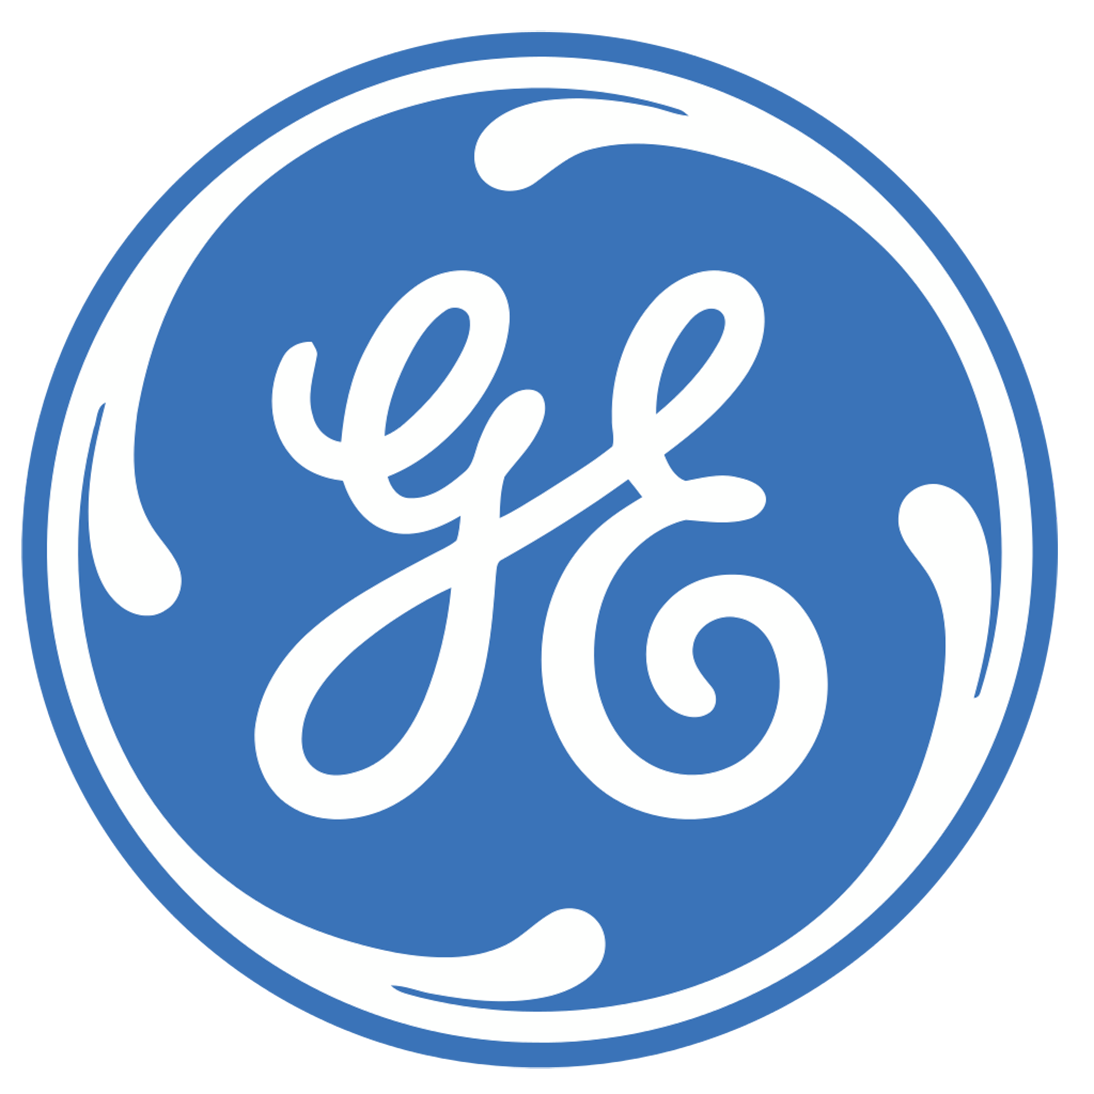 General Electrics